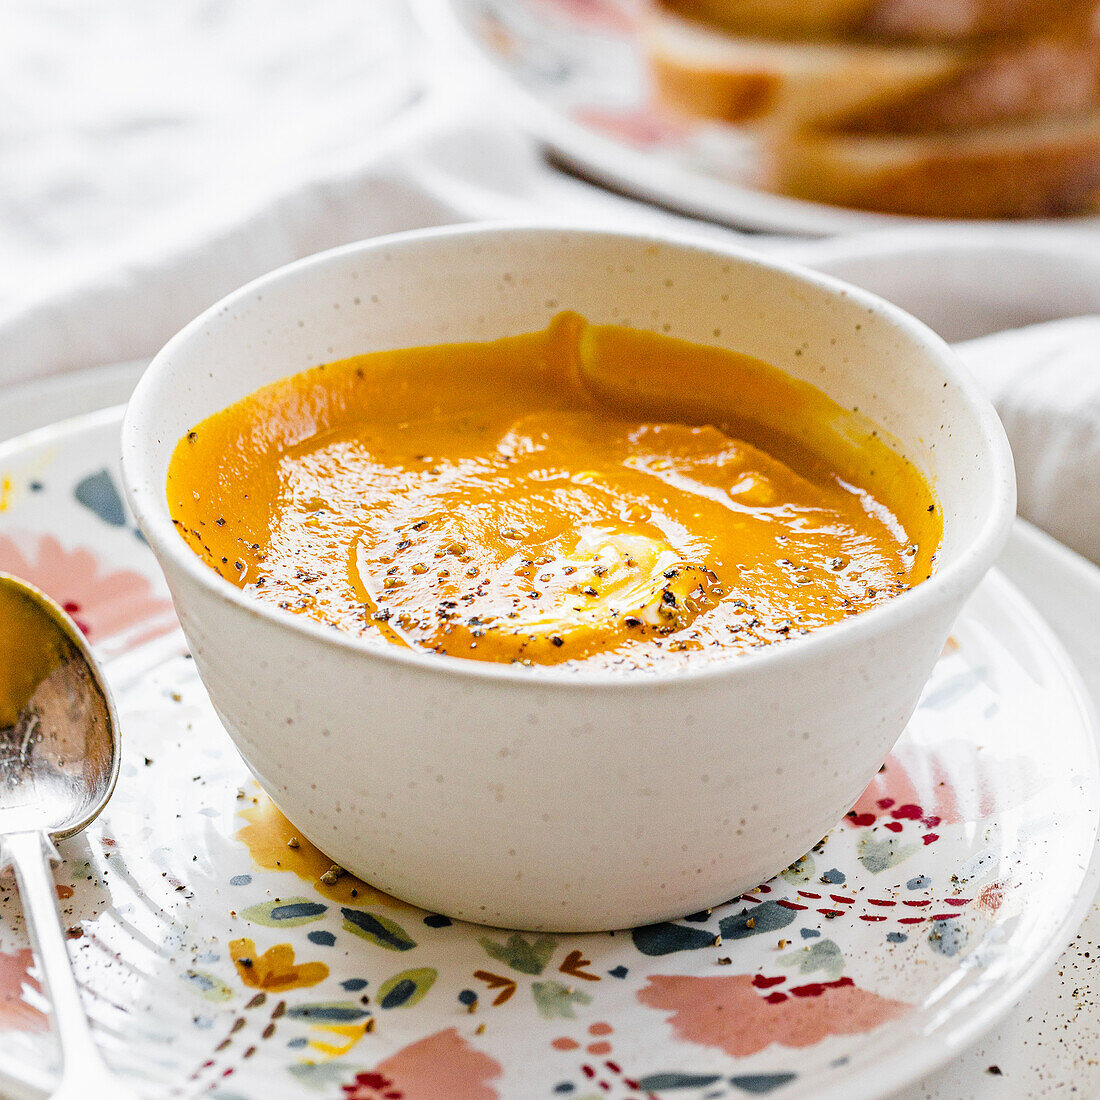 Orange pumpkin soup with a cream and pepper in white stoneware bowl